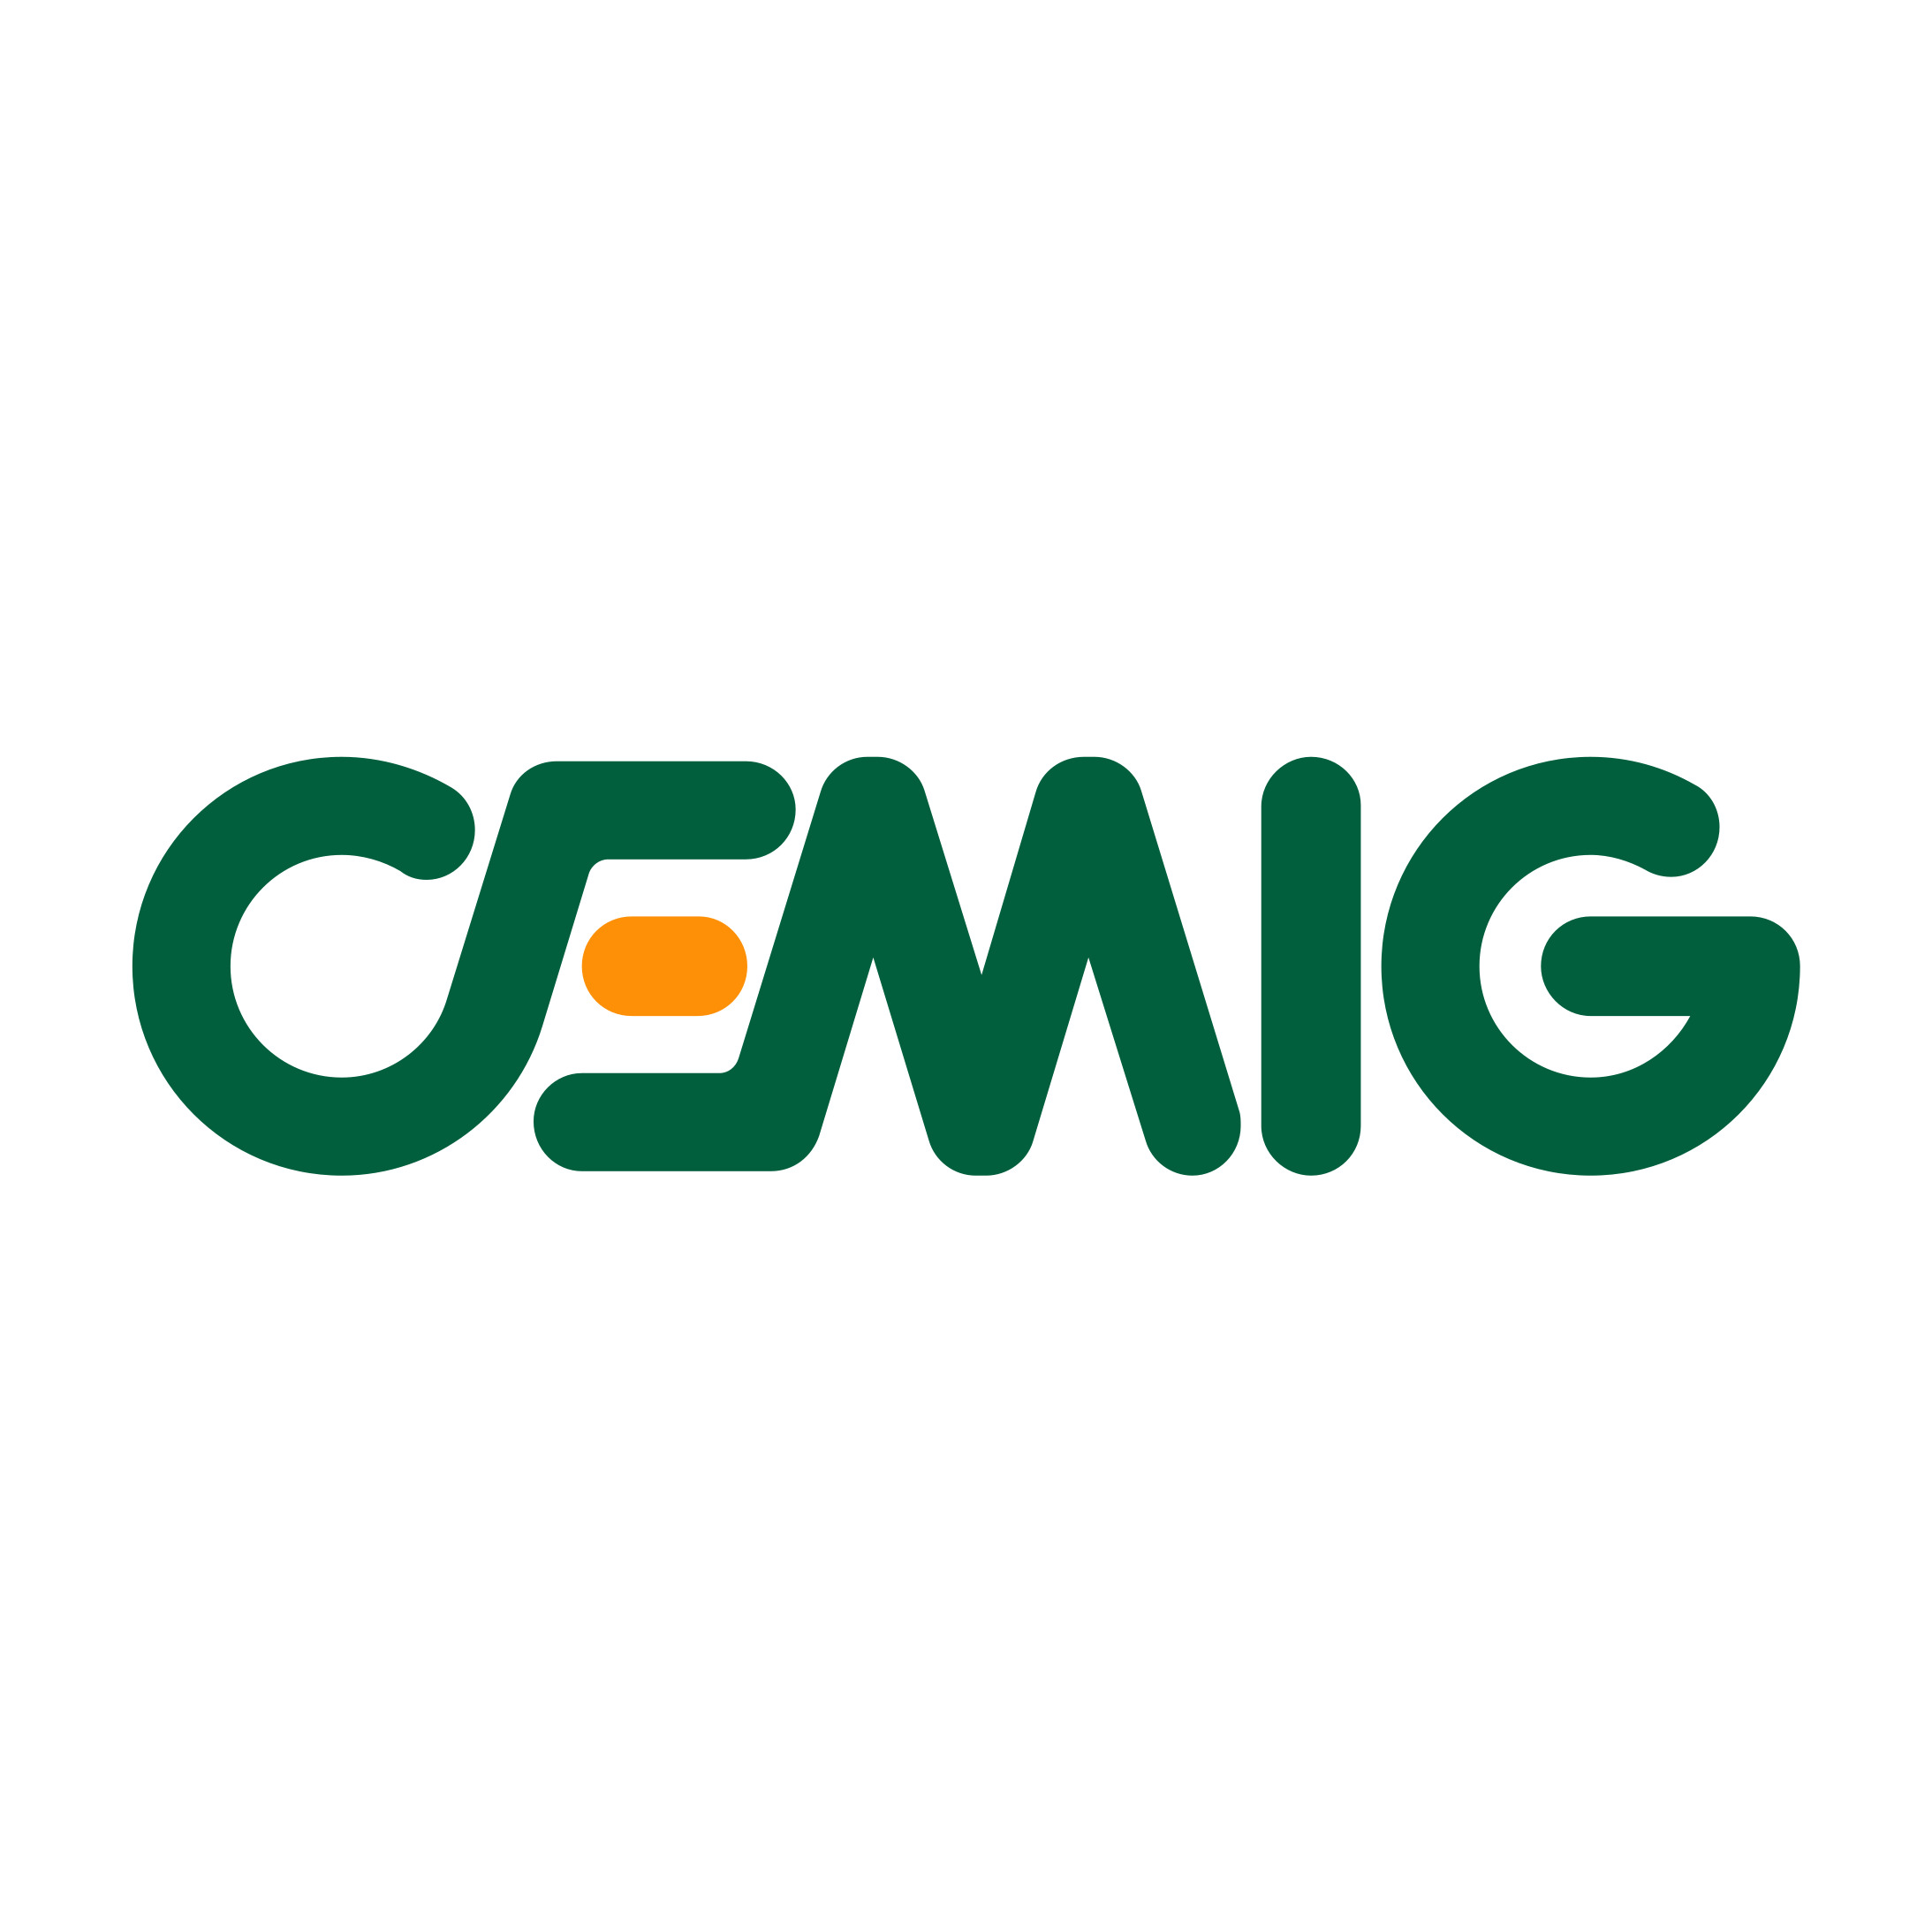 cemig-logo